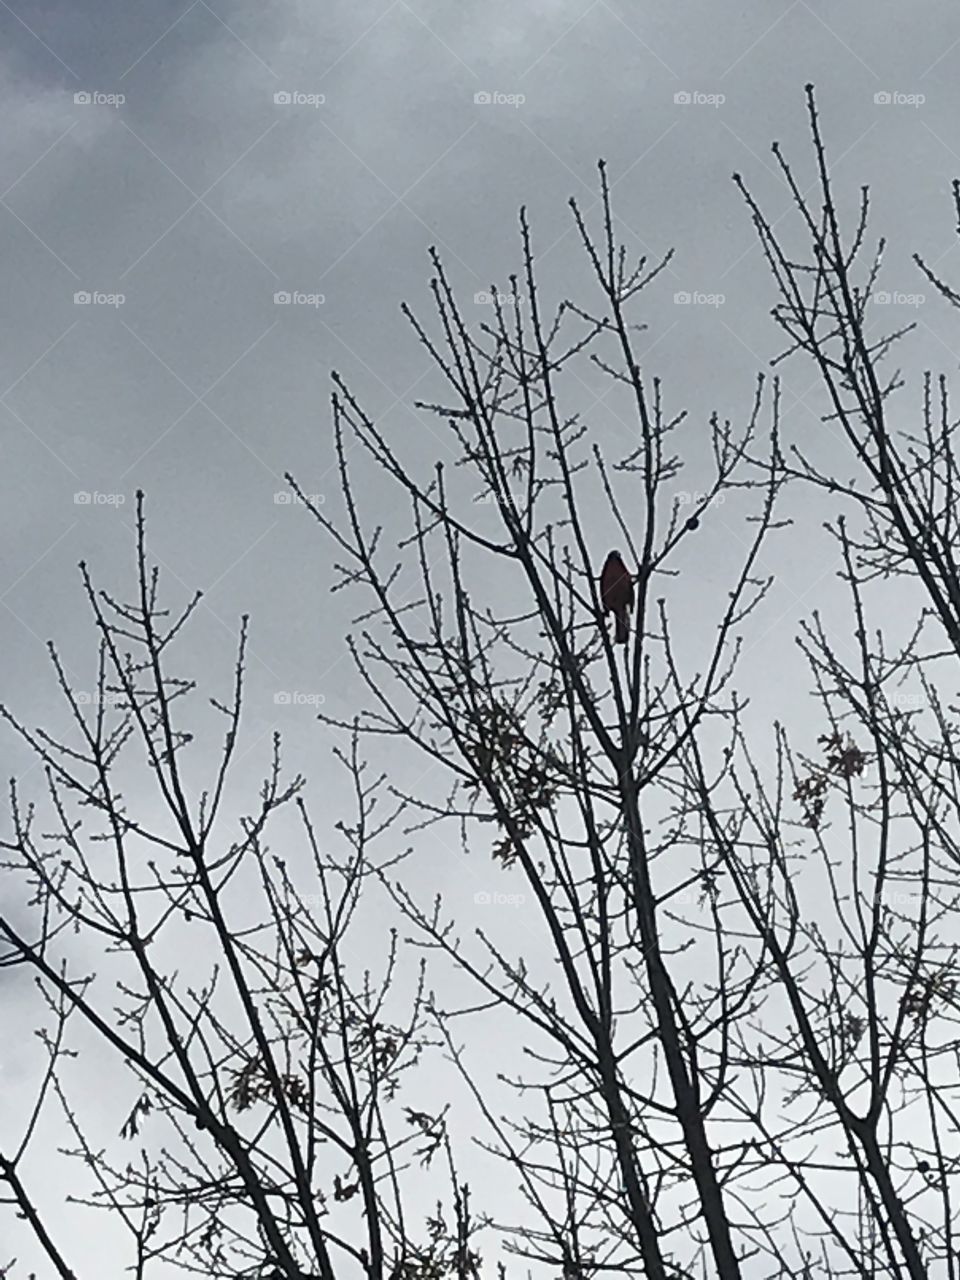 Cardinal in the tree